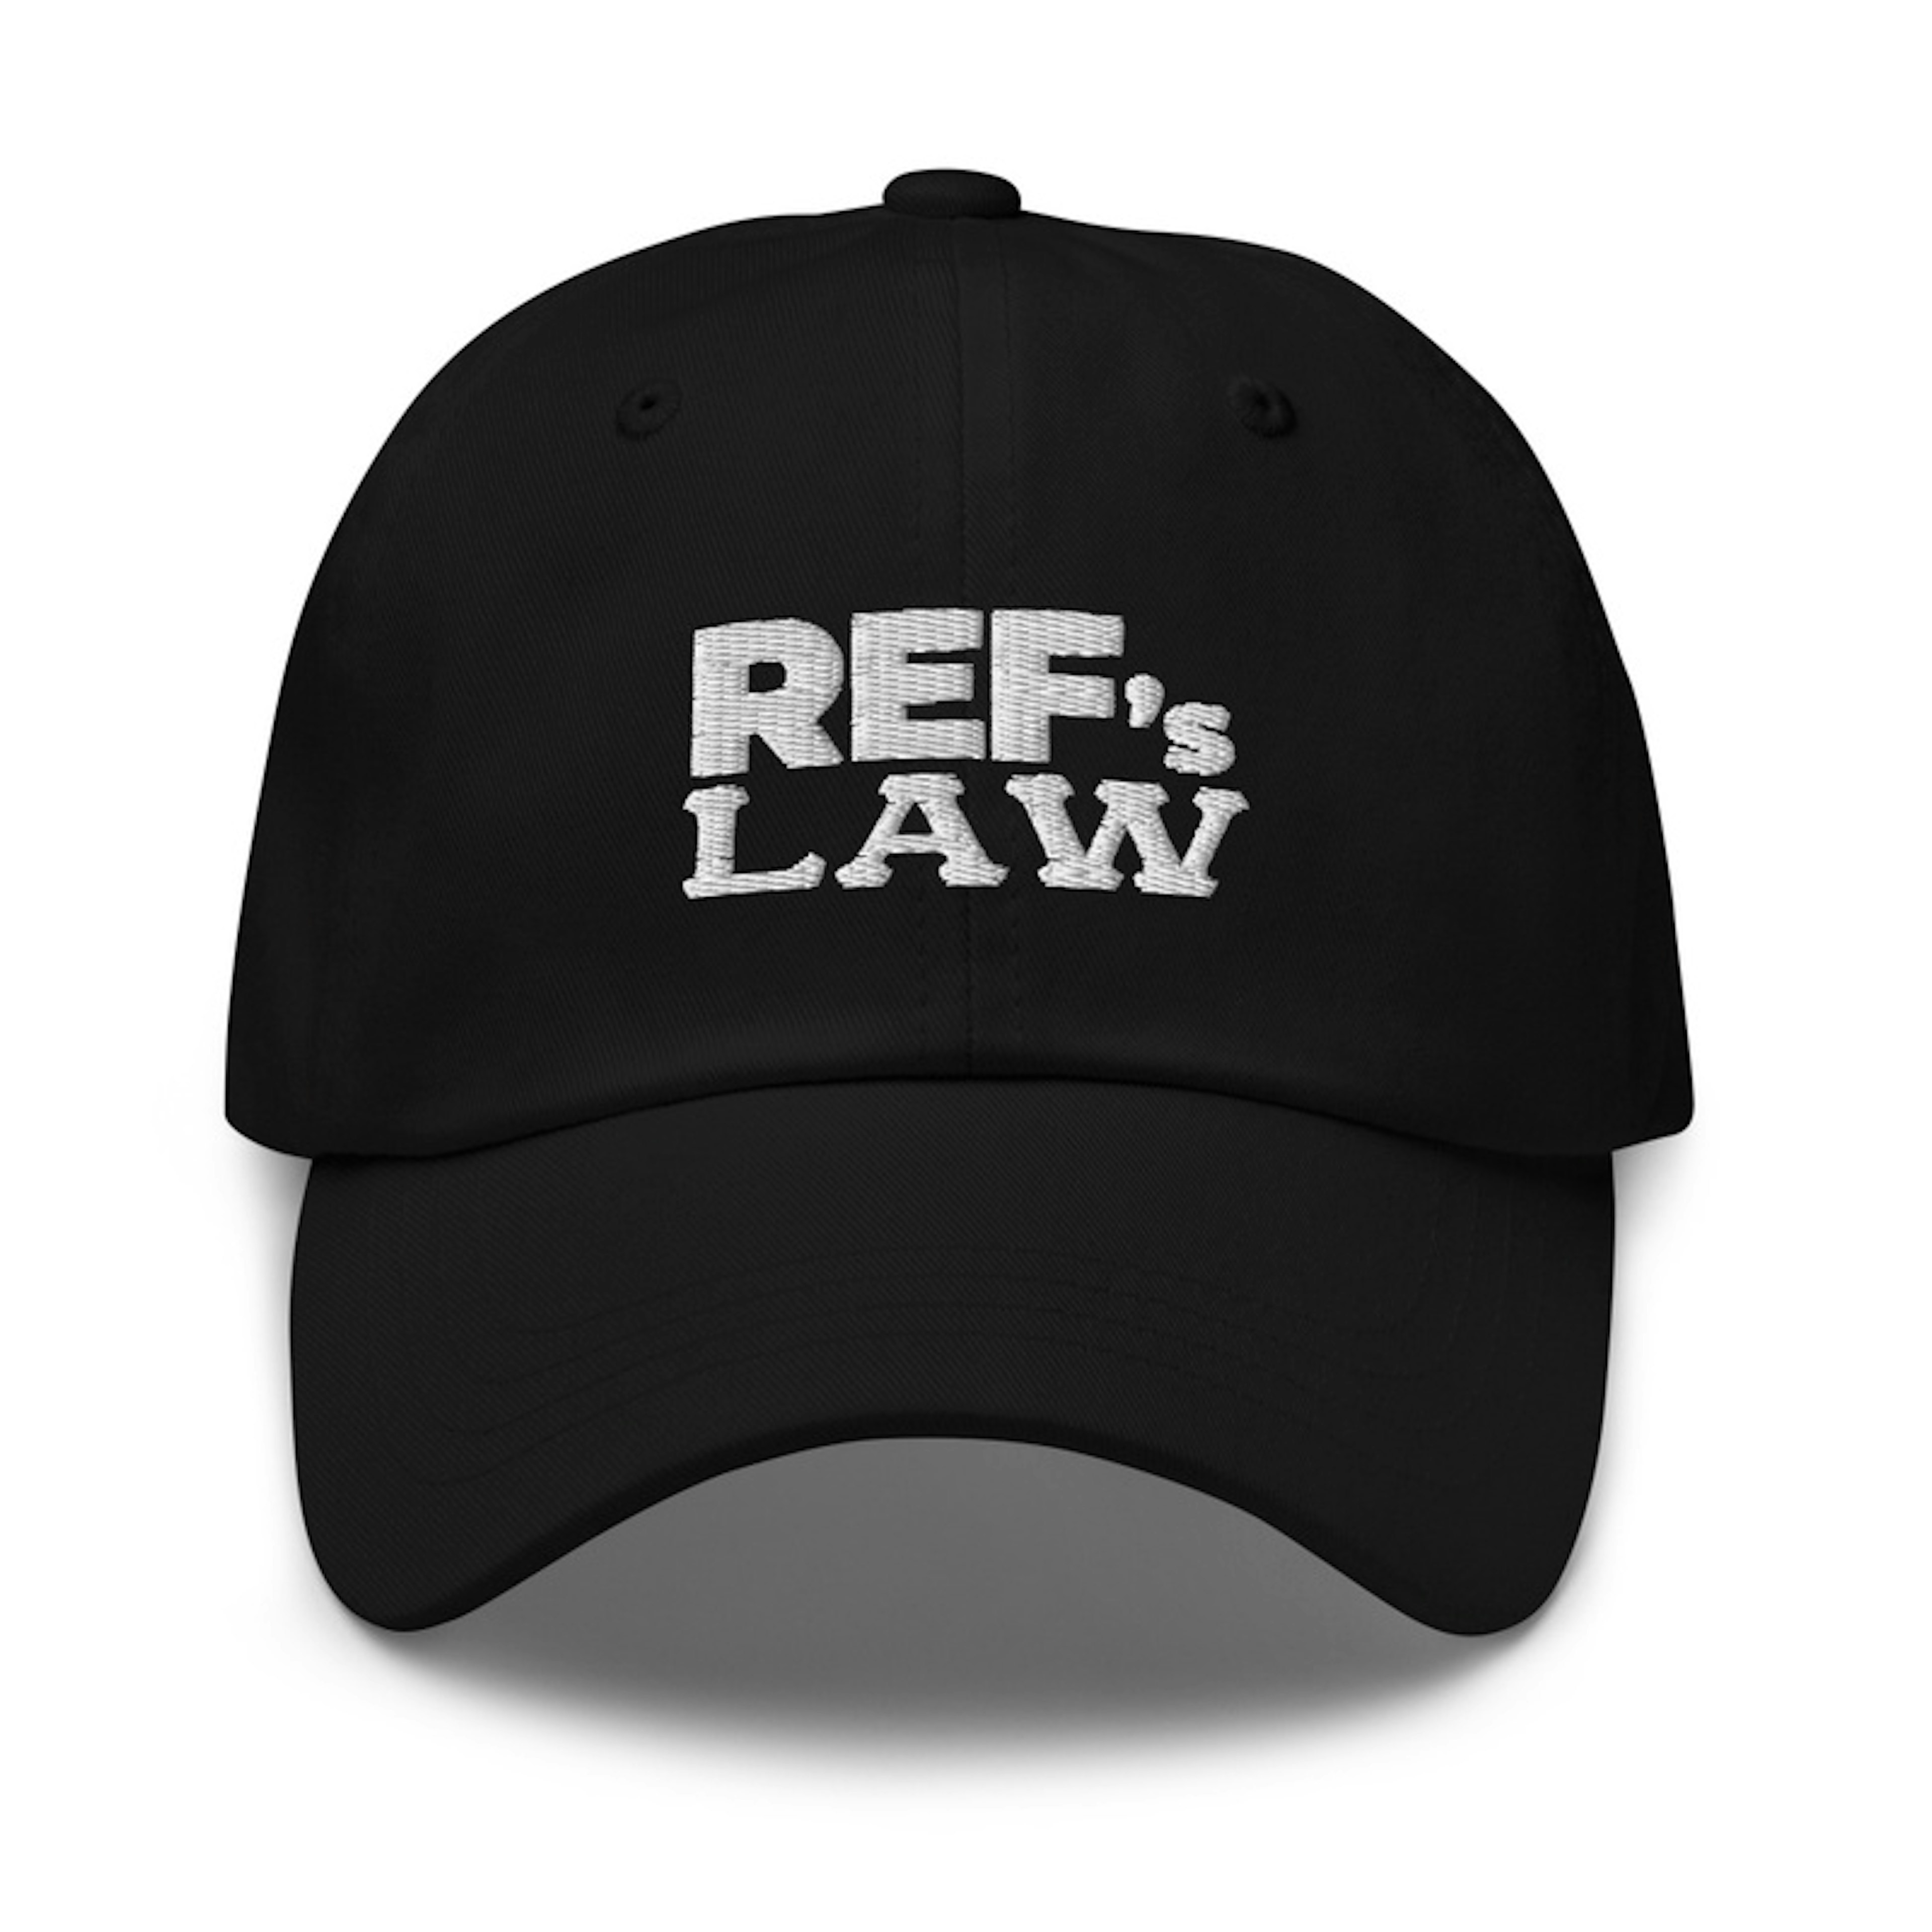 REF's Law - Hat